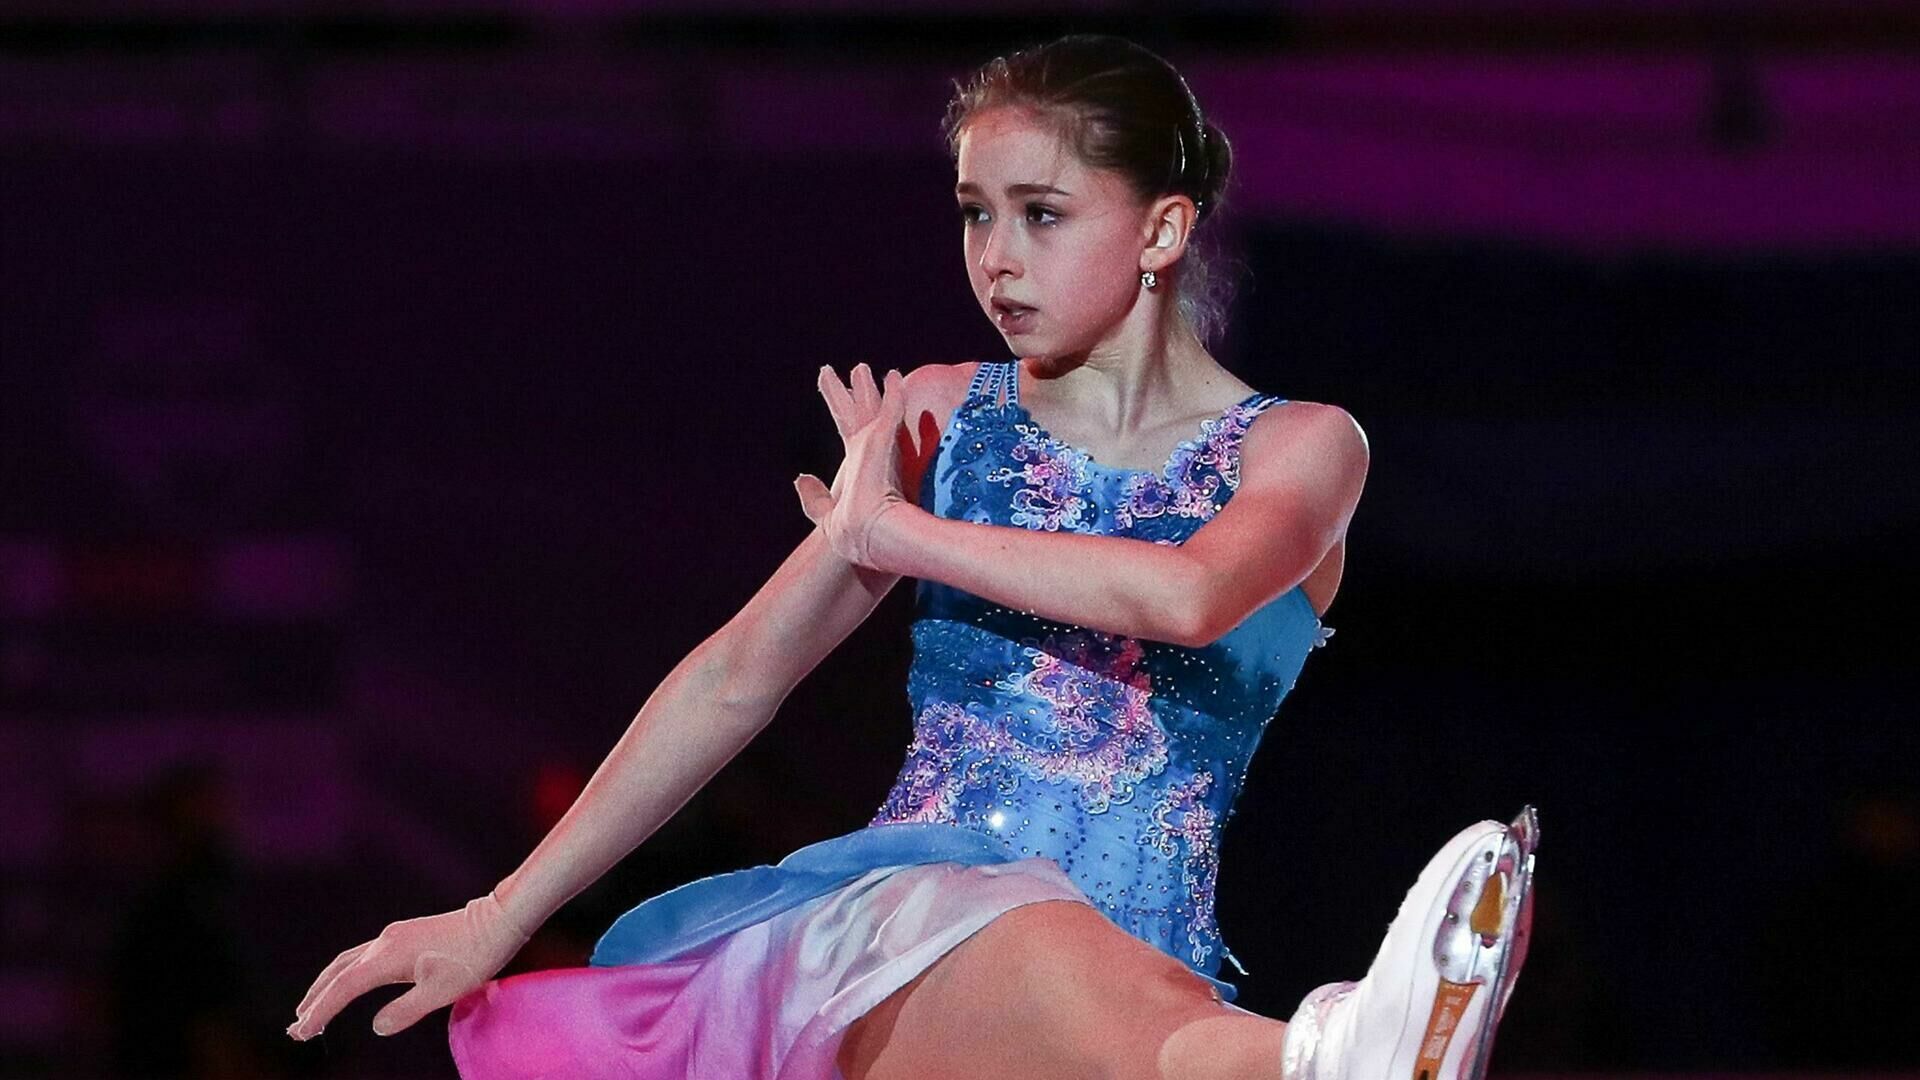 IOC intends to provide psychological assistance to figure skater Kamila Valiyeva